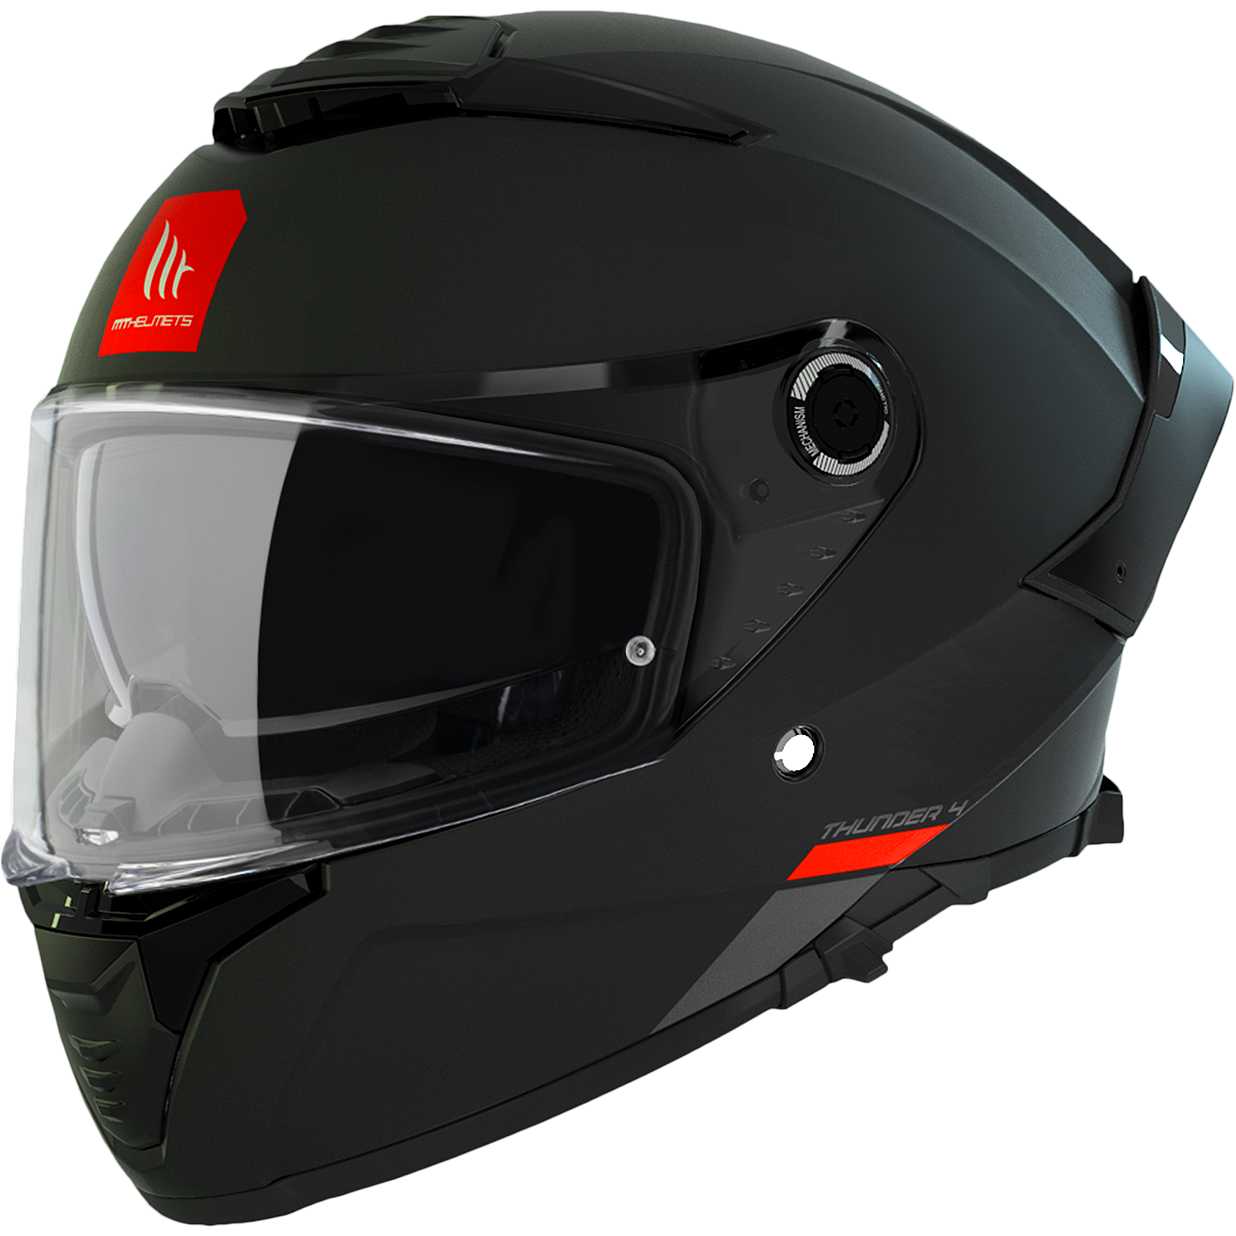 Casque cross MT Helmets Falcon Solid noir mat – Équipement moto cross